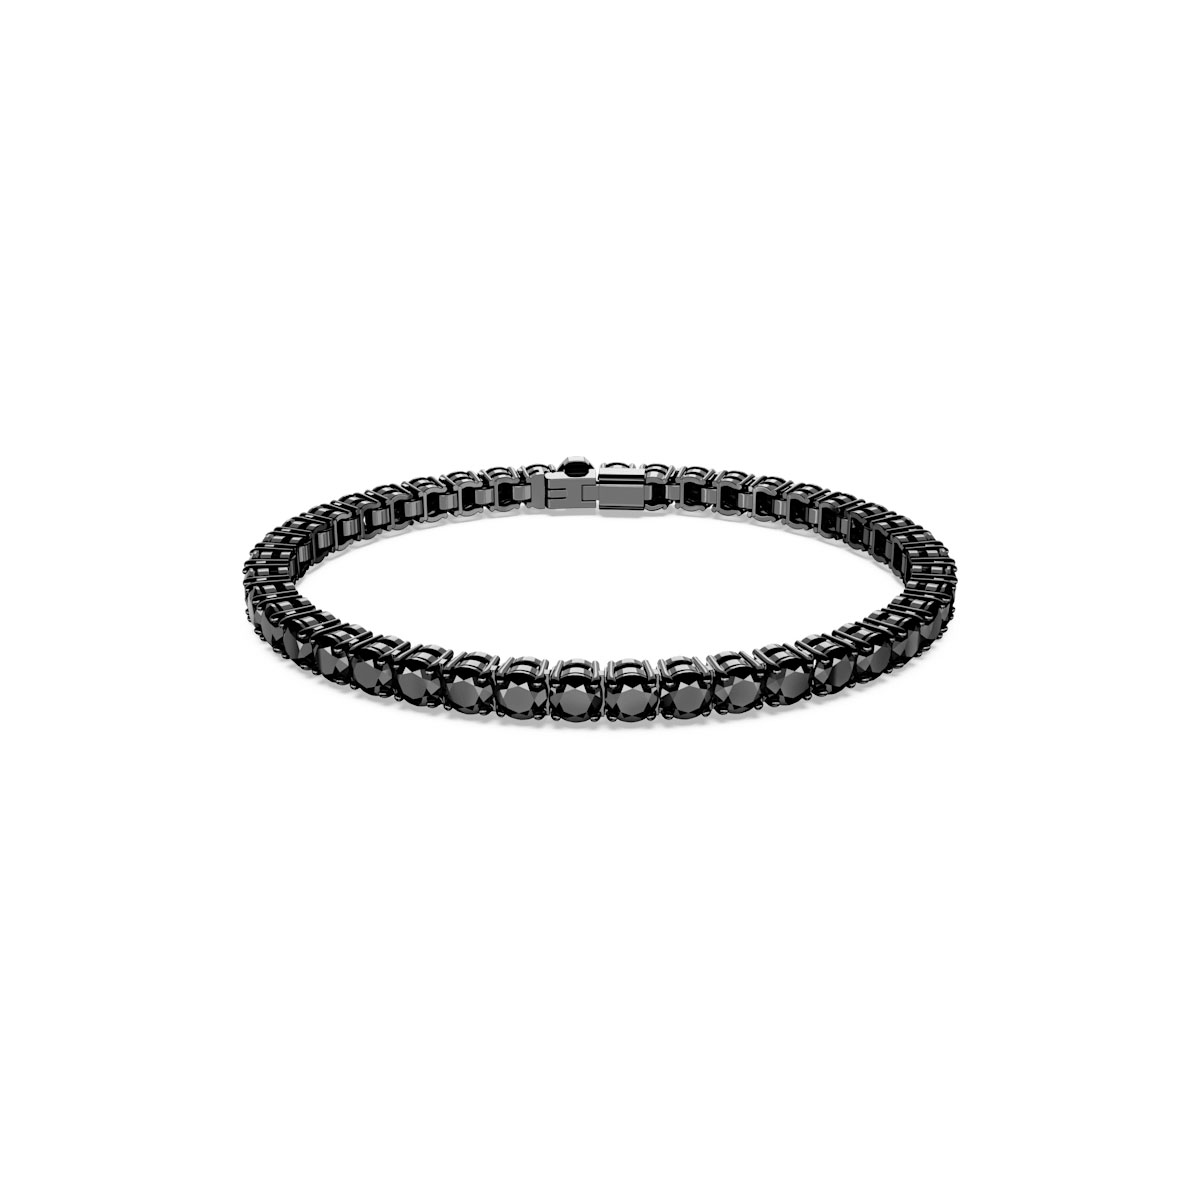 Swarovski Matrix Tennis bracelet, Round cut, Black, Ruthenium S